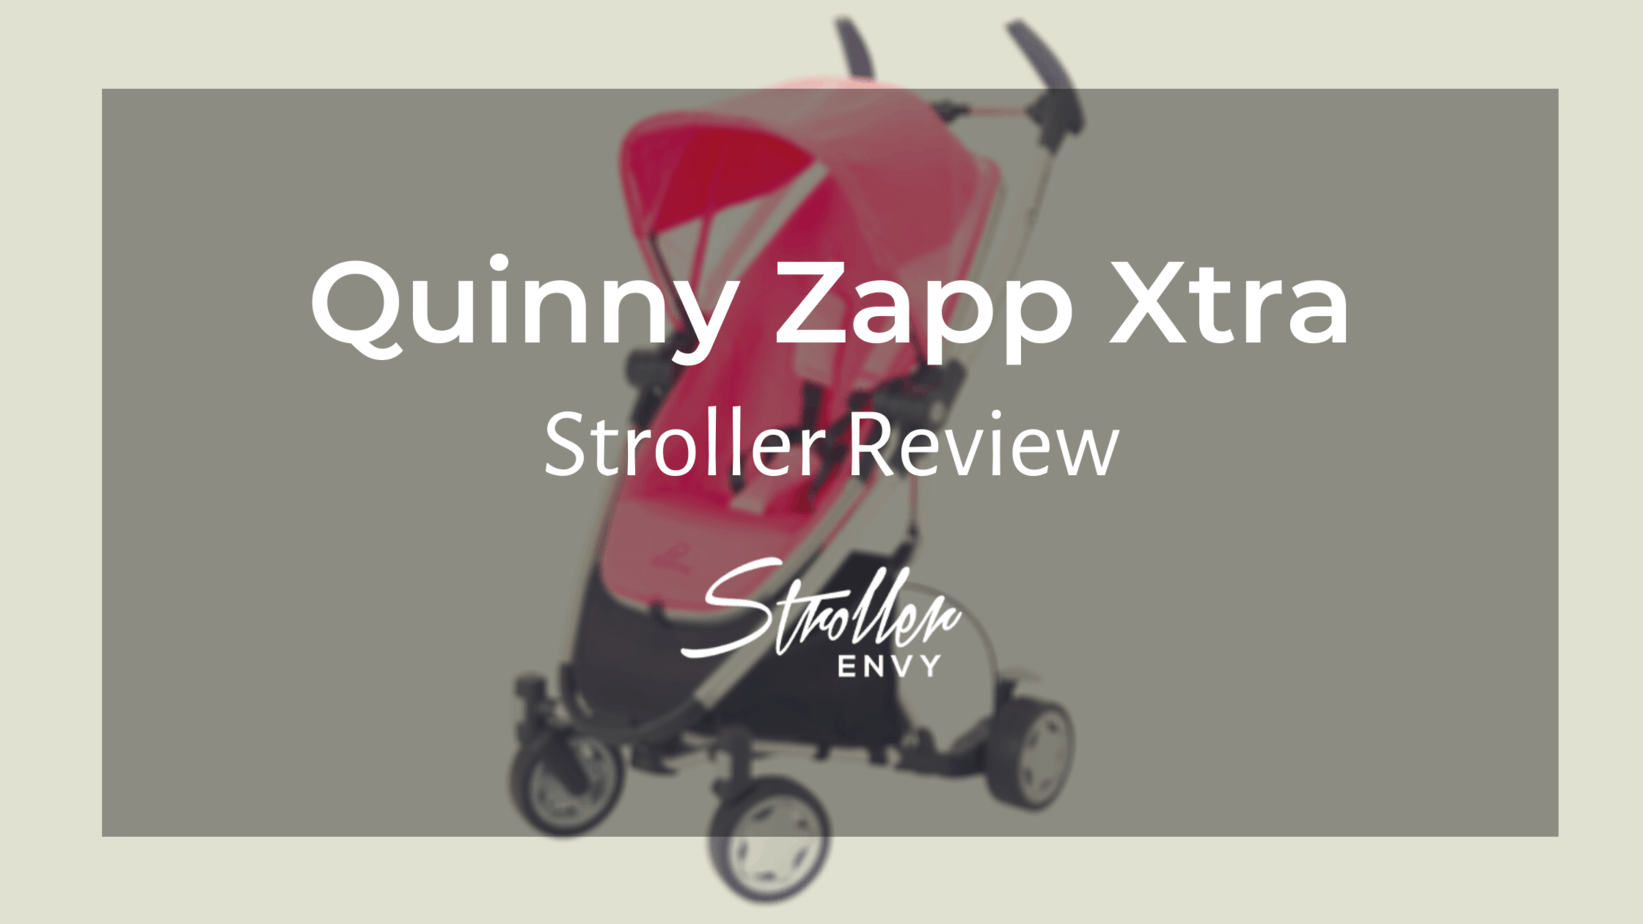 Quinny Zapp Xtra Stroller Review